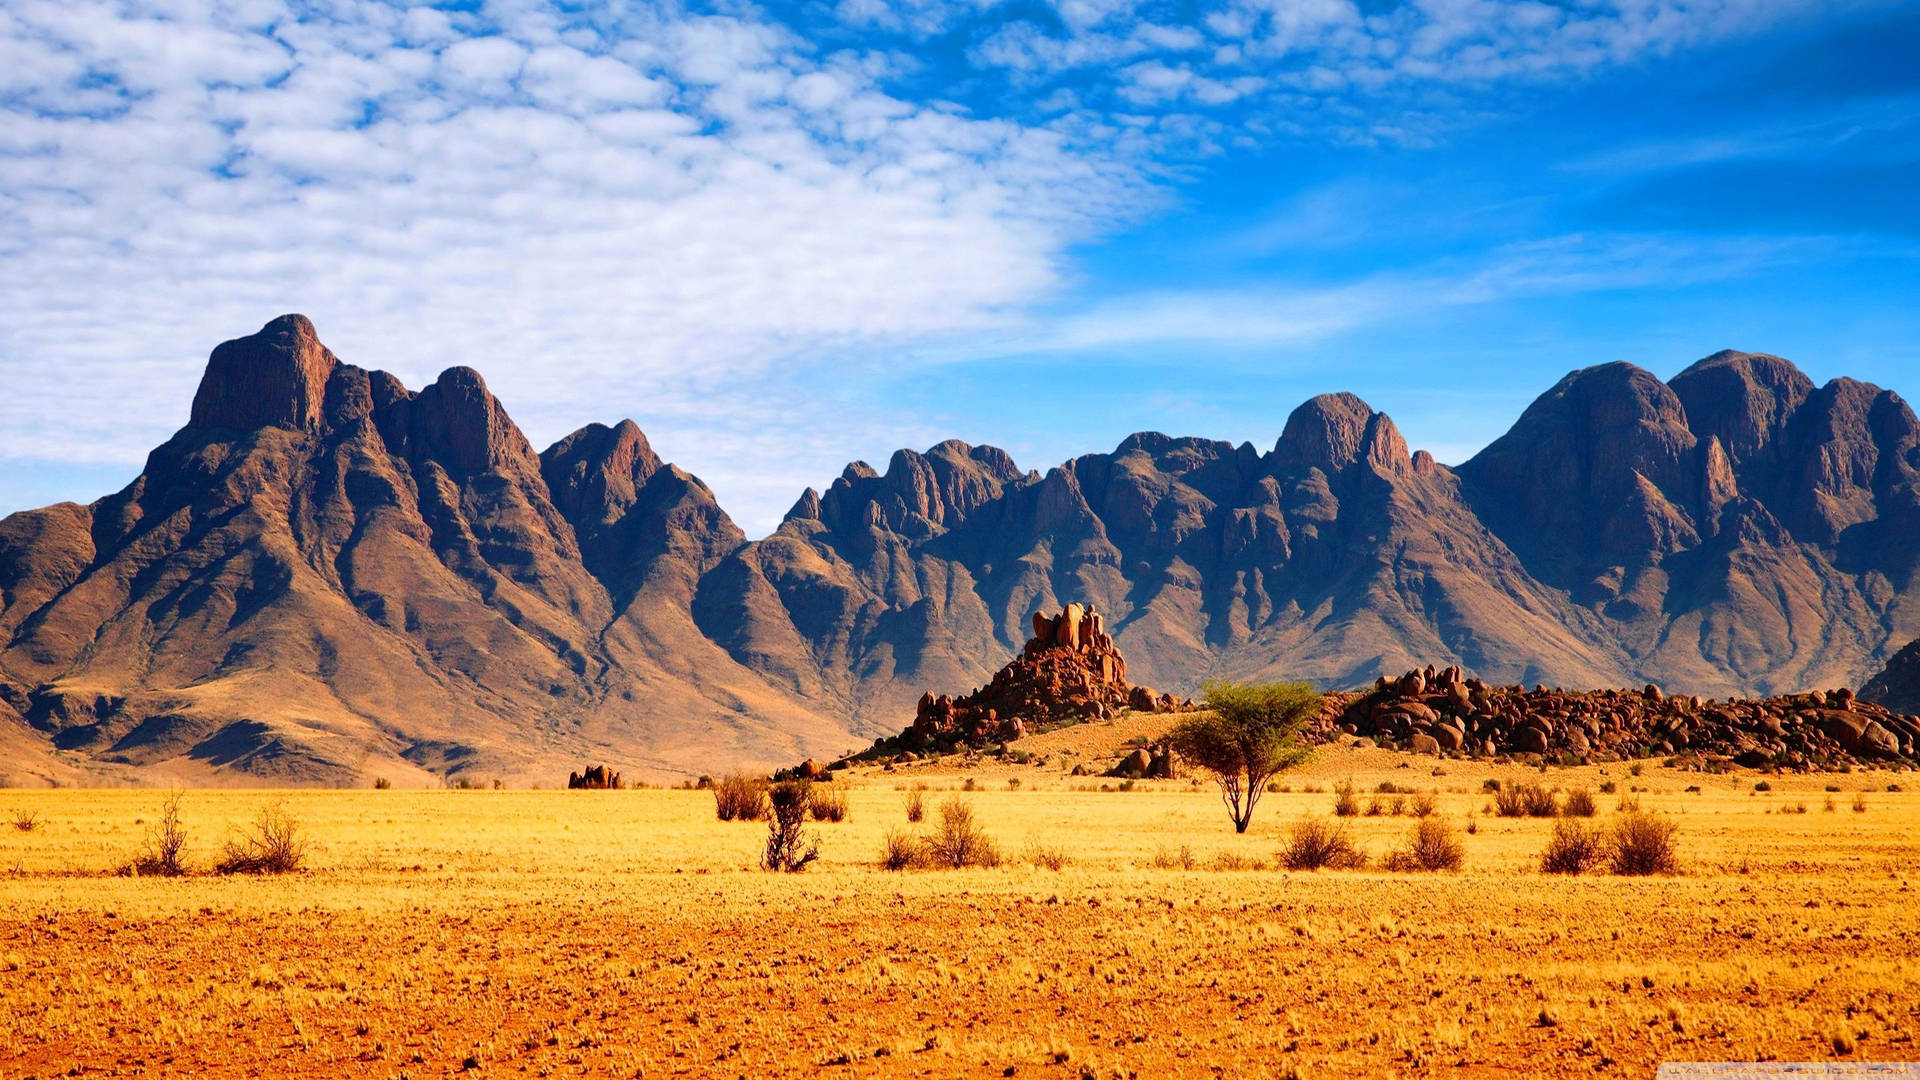 Desert Mountains Ridge In South Africa